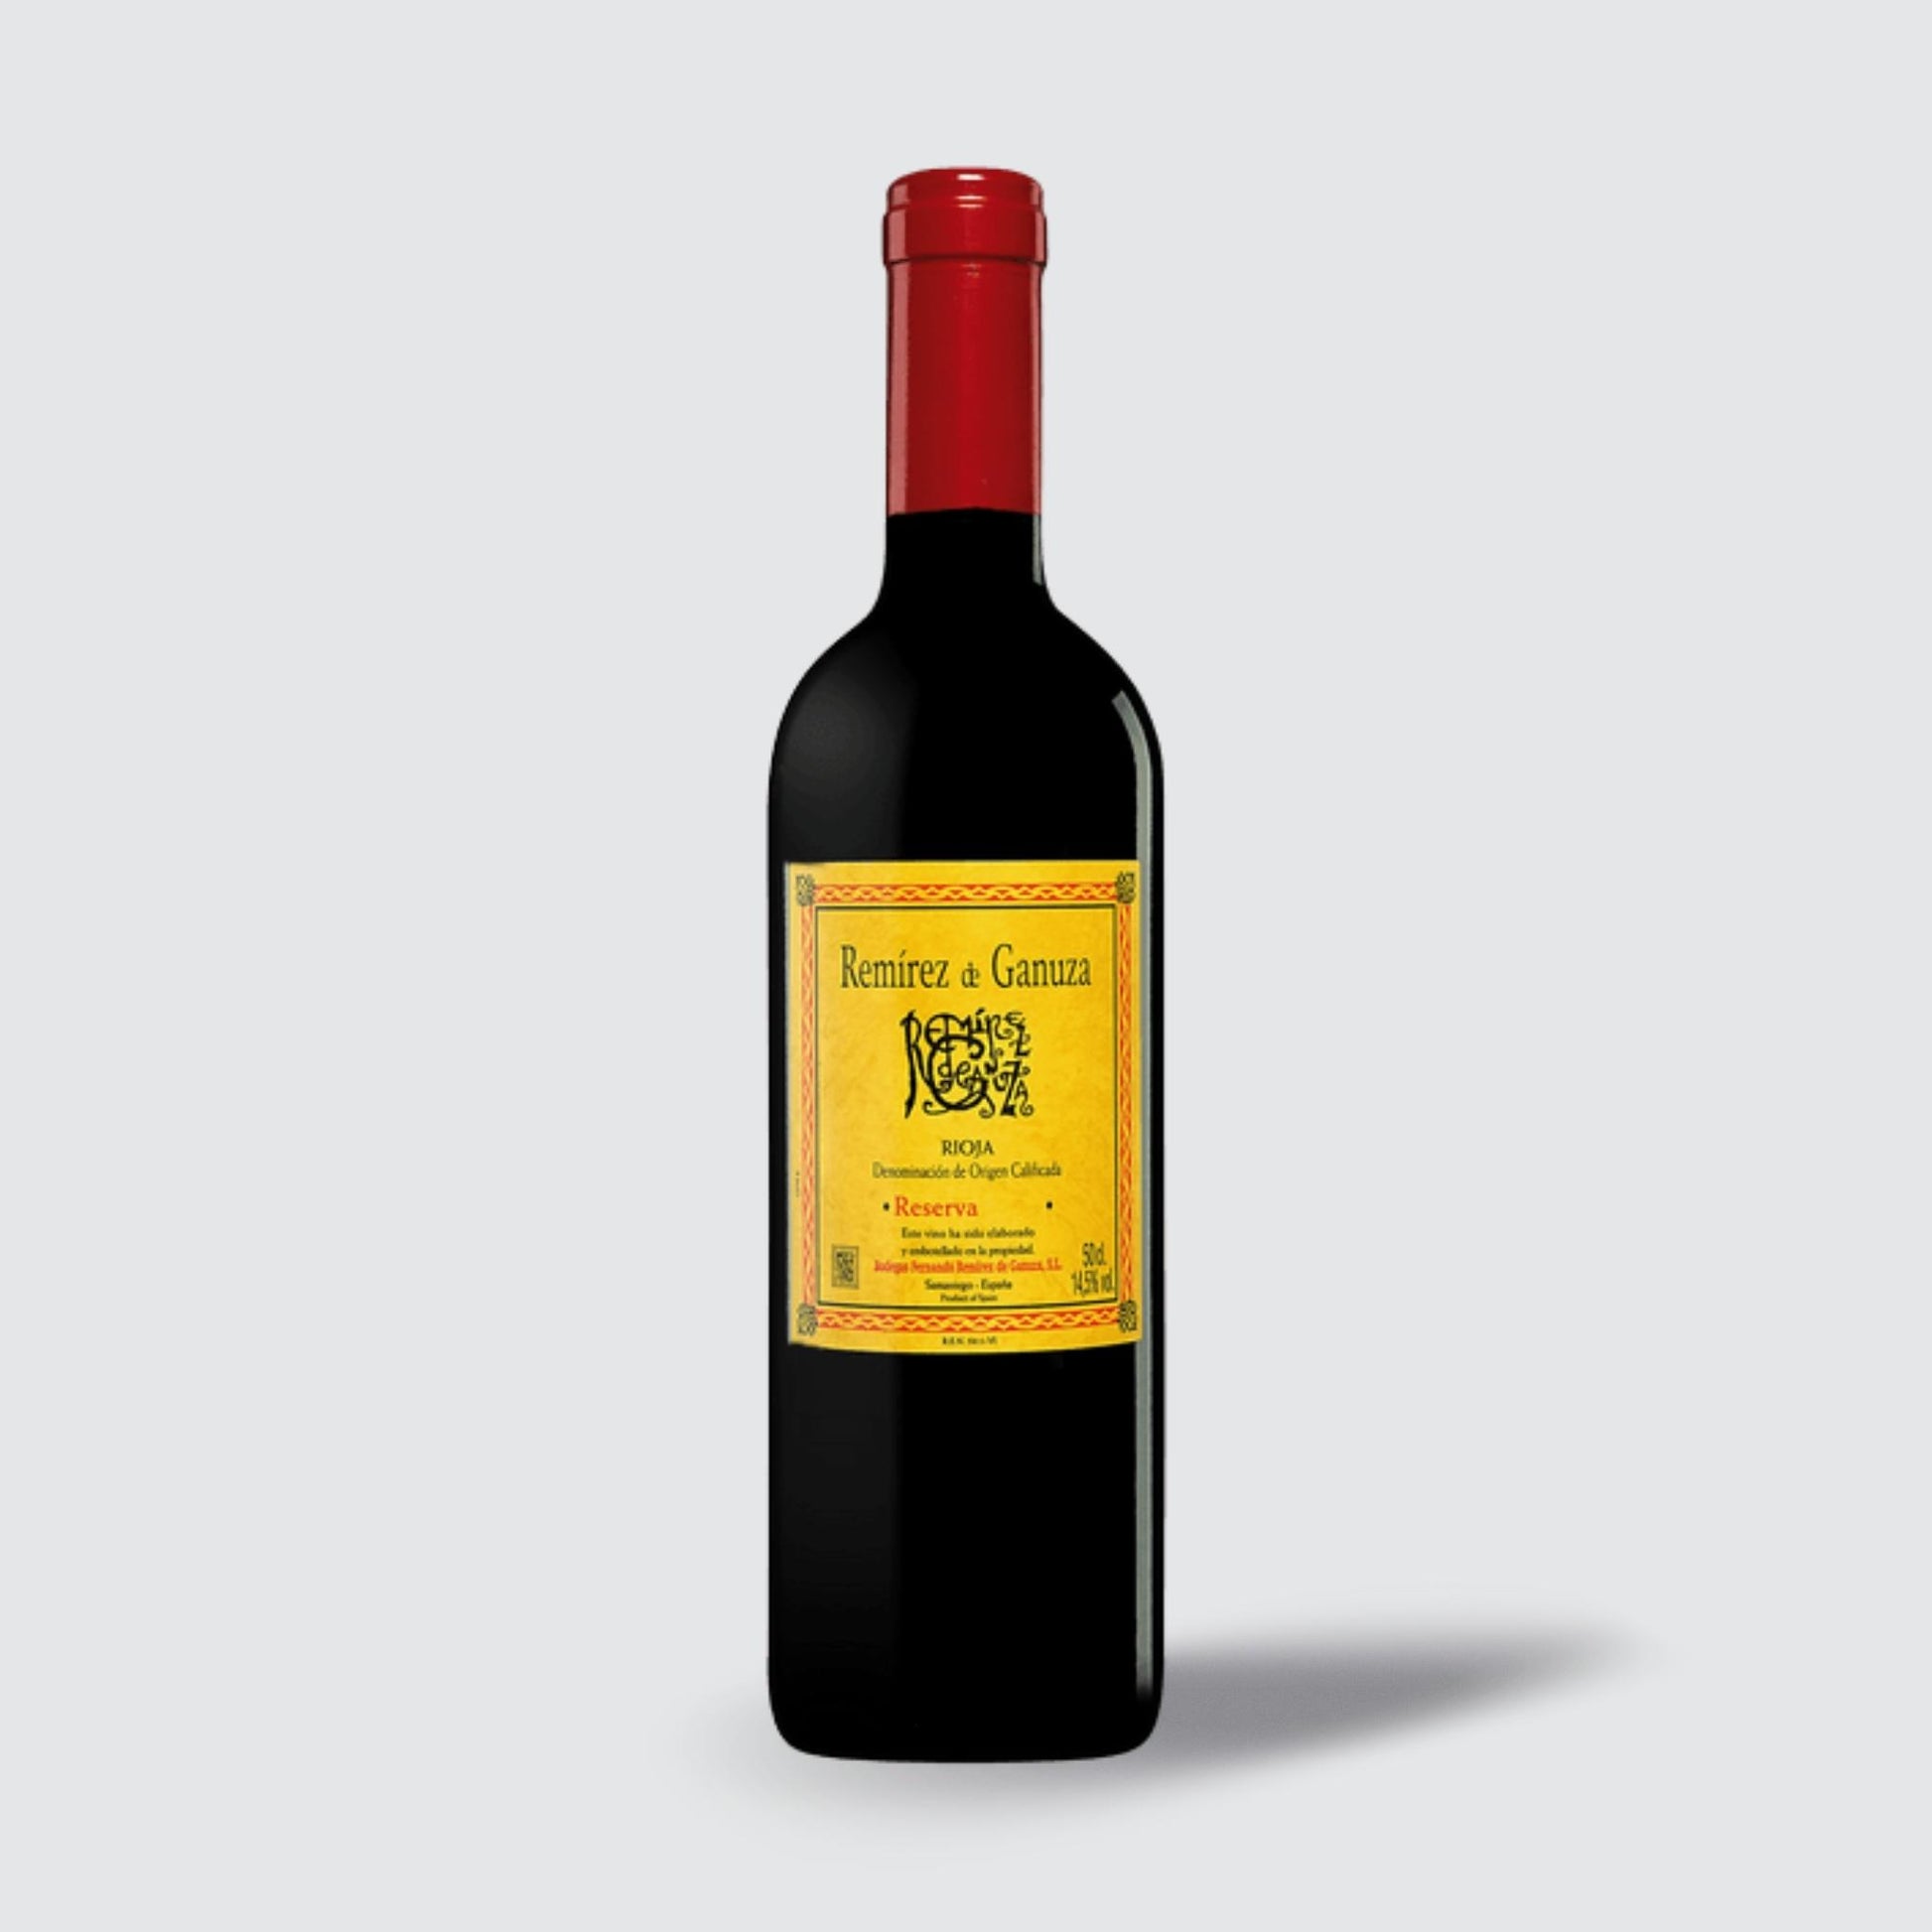 Remirez de Ganuza Reserva 2014 rioja red wine